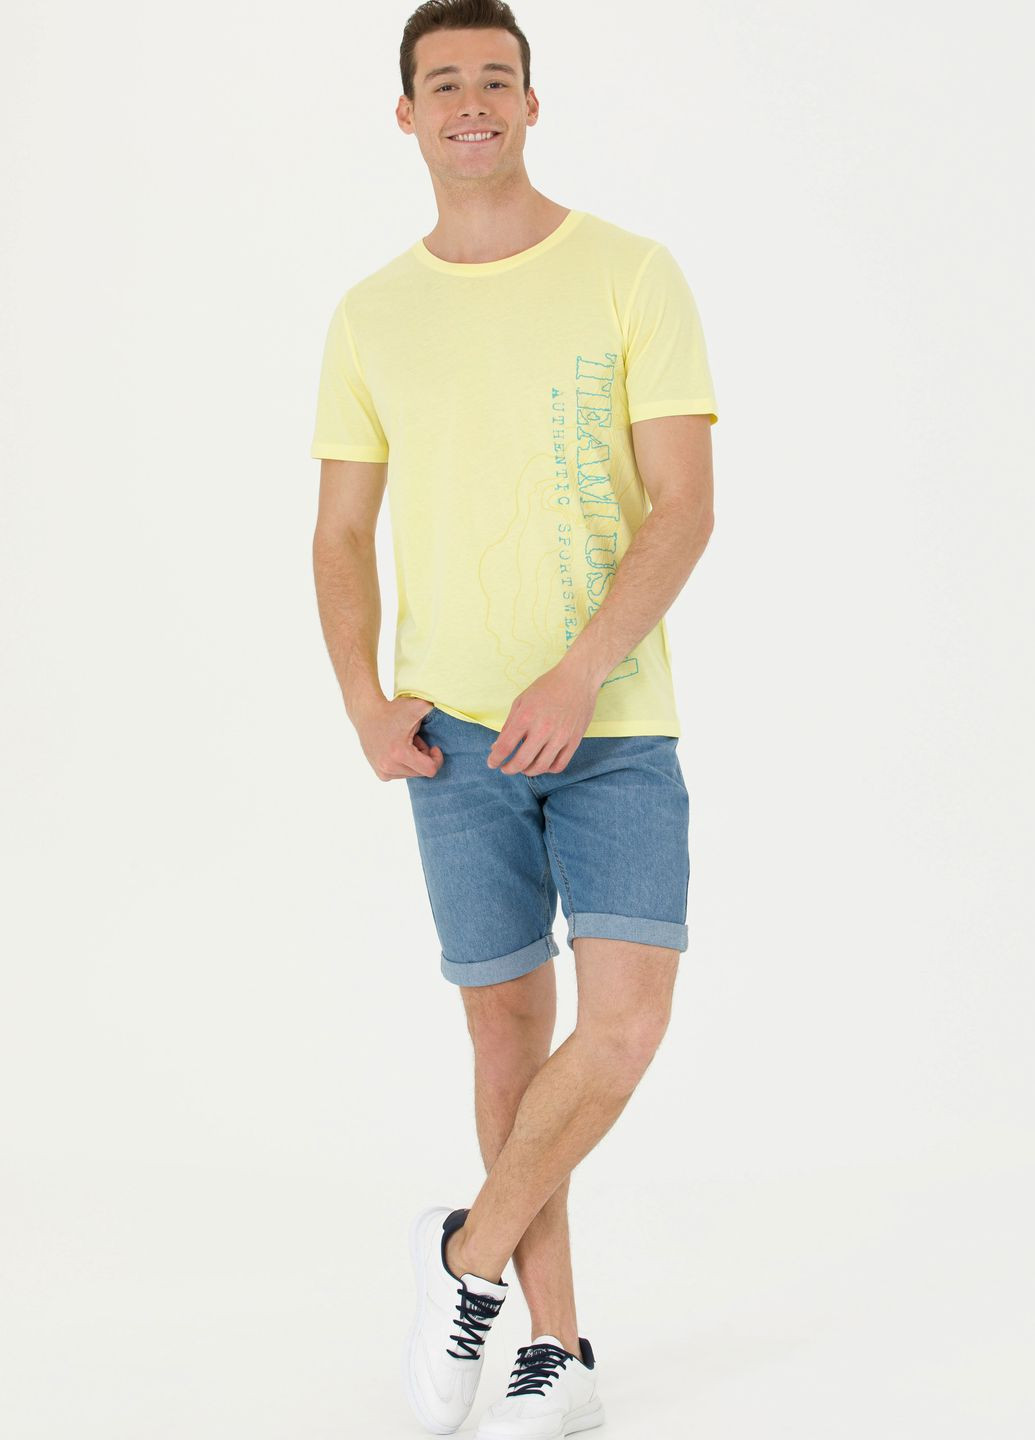 Светло-желтая футболка-футболка u.s/ polo assn. мужская для мужчин U.S. Polo Assn.